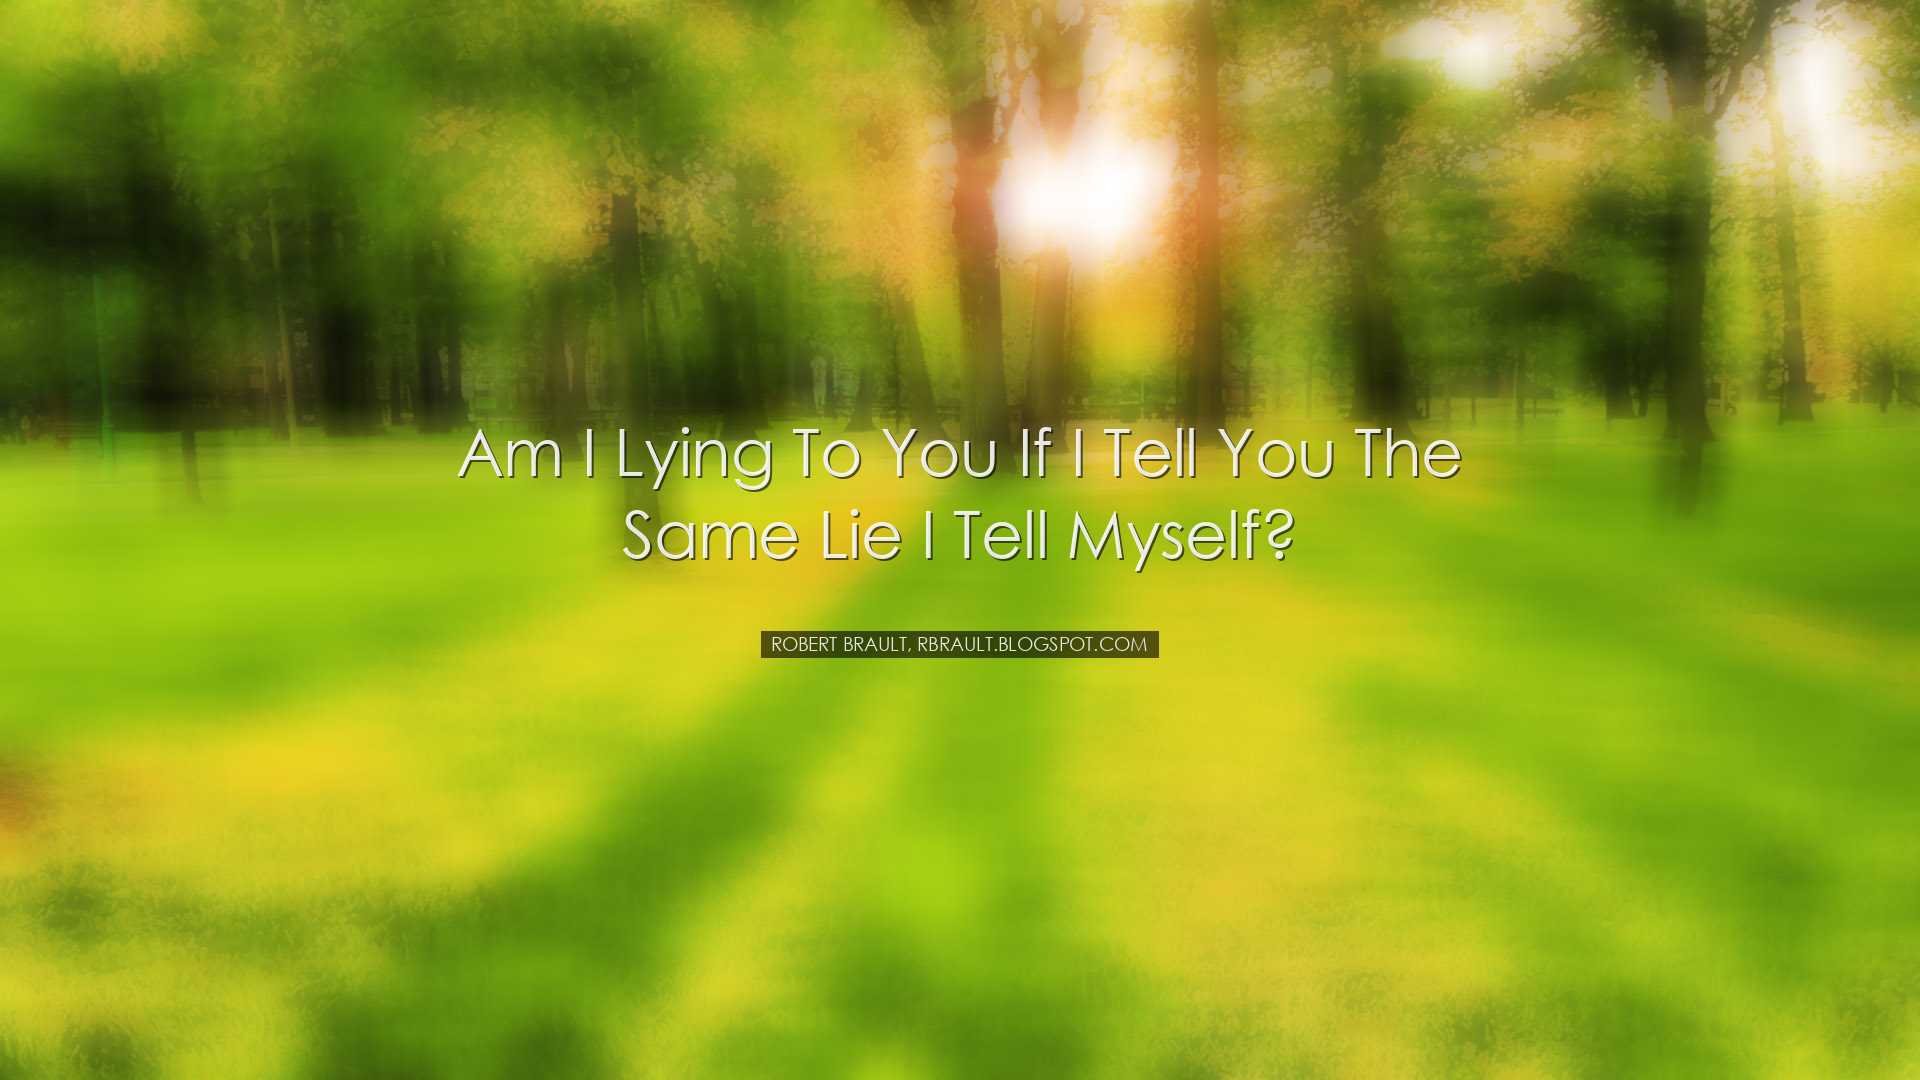 Am I lying to you if I tell you the same lie I tell myself? - Robe